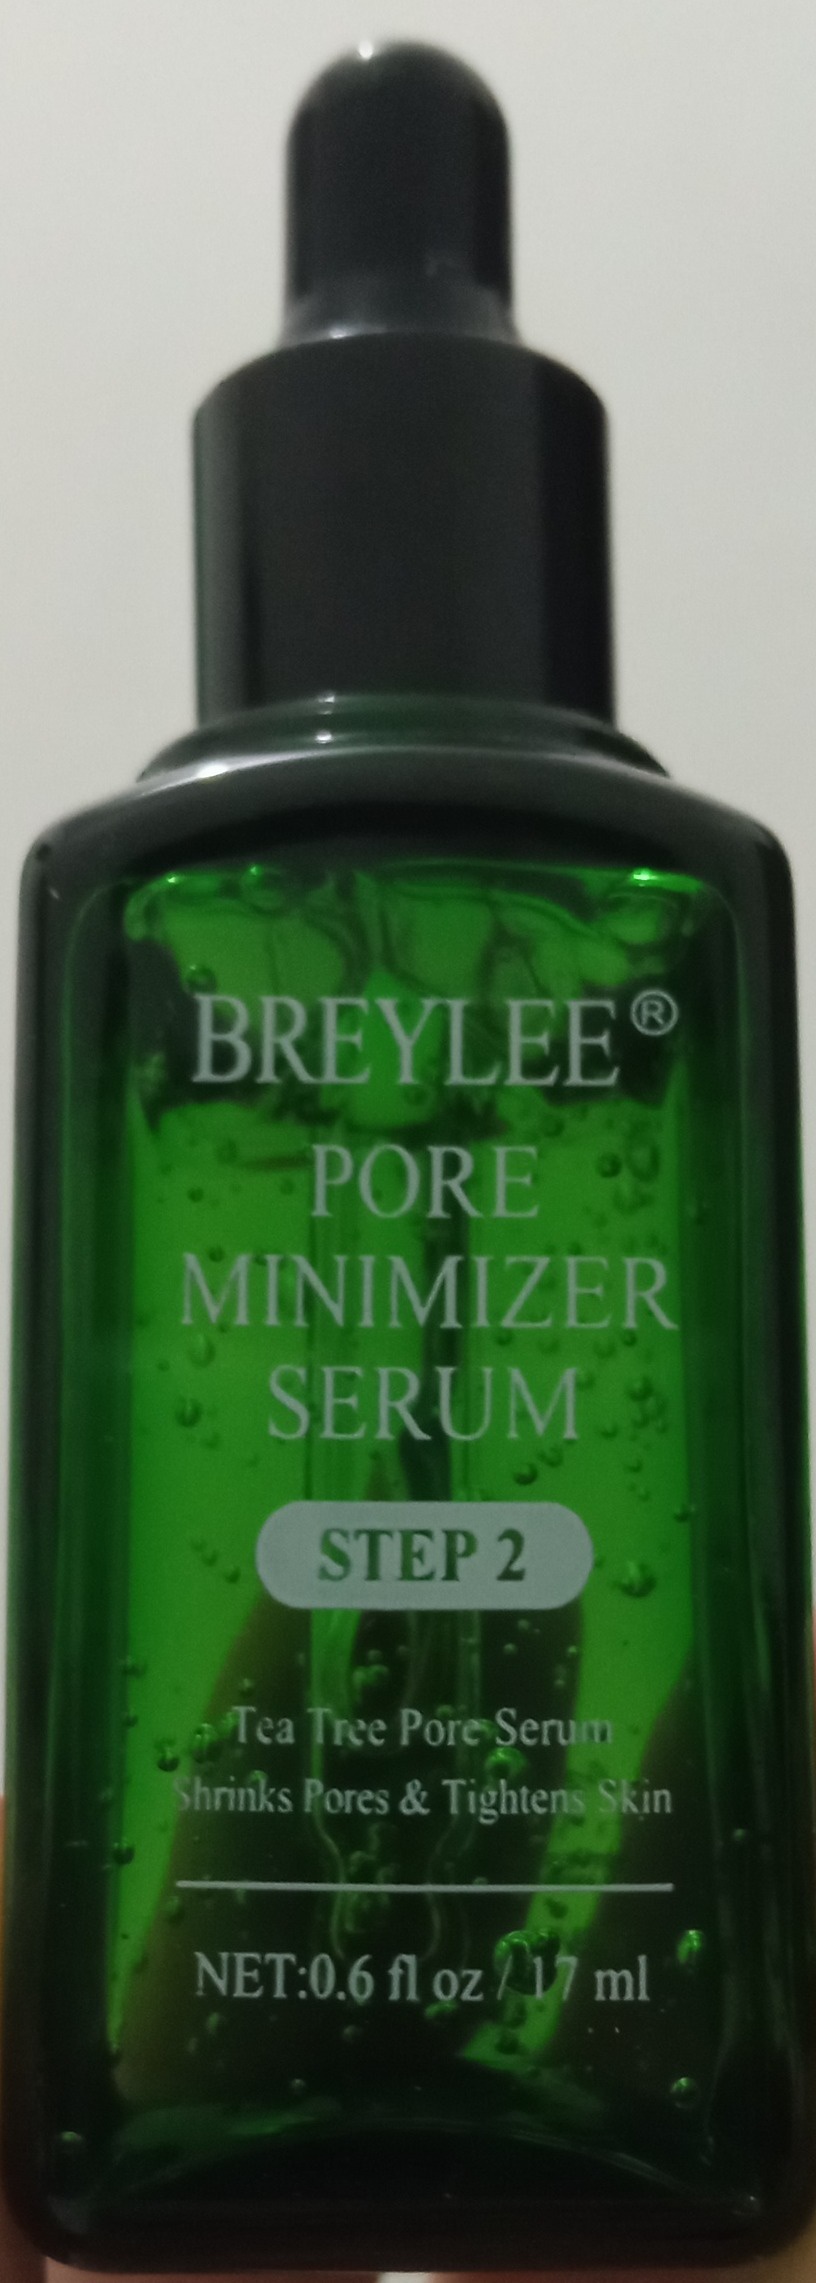 Breylee Pore Minimizer Serum Step 2